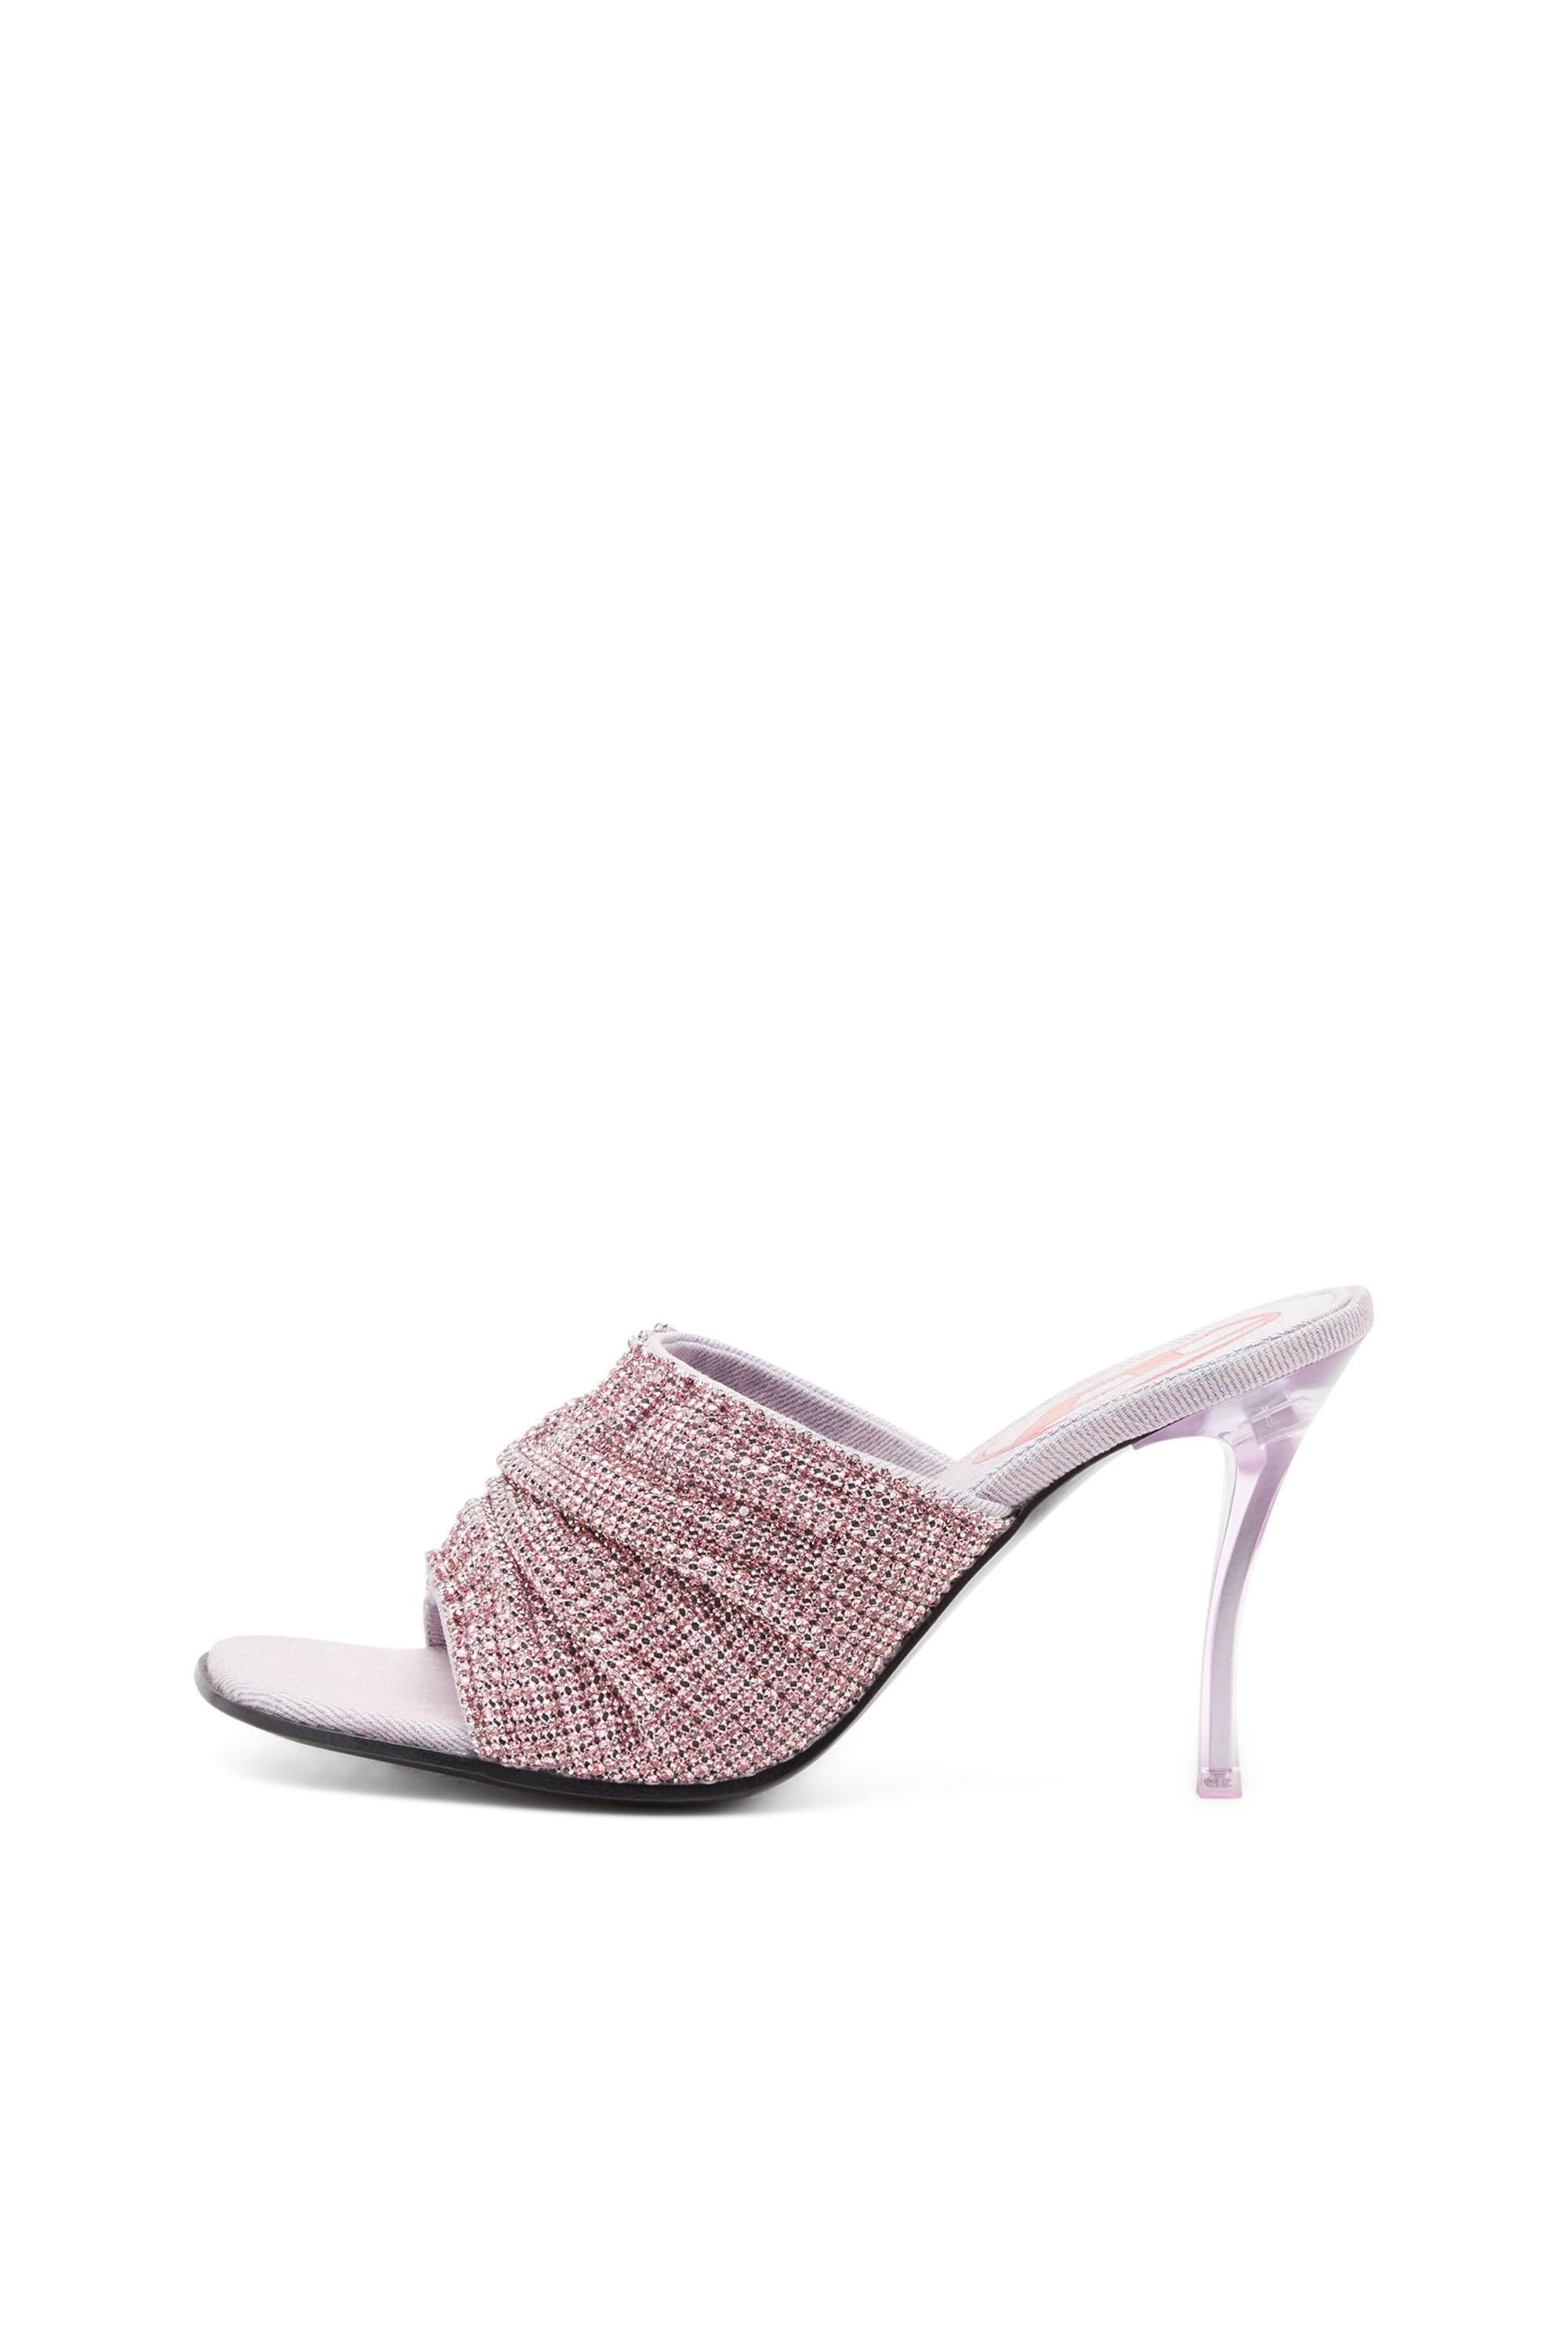 Diesel - D-SYDNEY SDL S, Woman D-Sydney Sdl S Sandals - Mule sandals with rhinestone band in Pink - Image 8